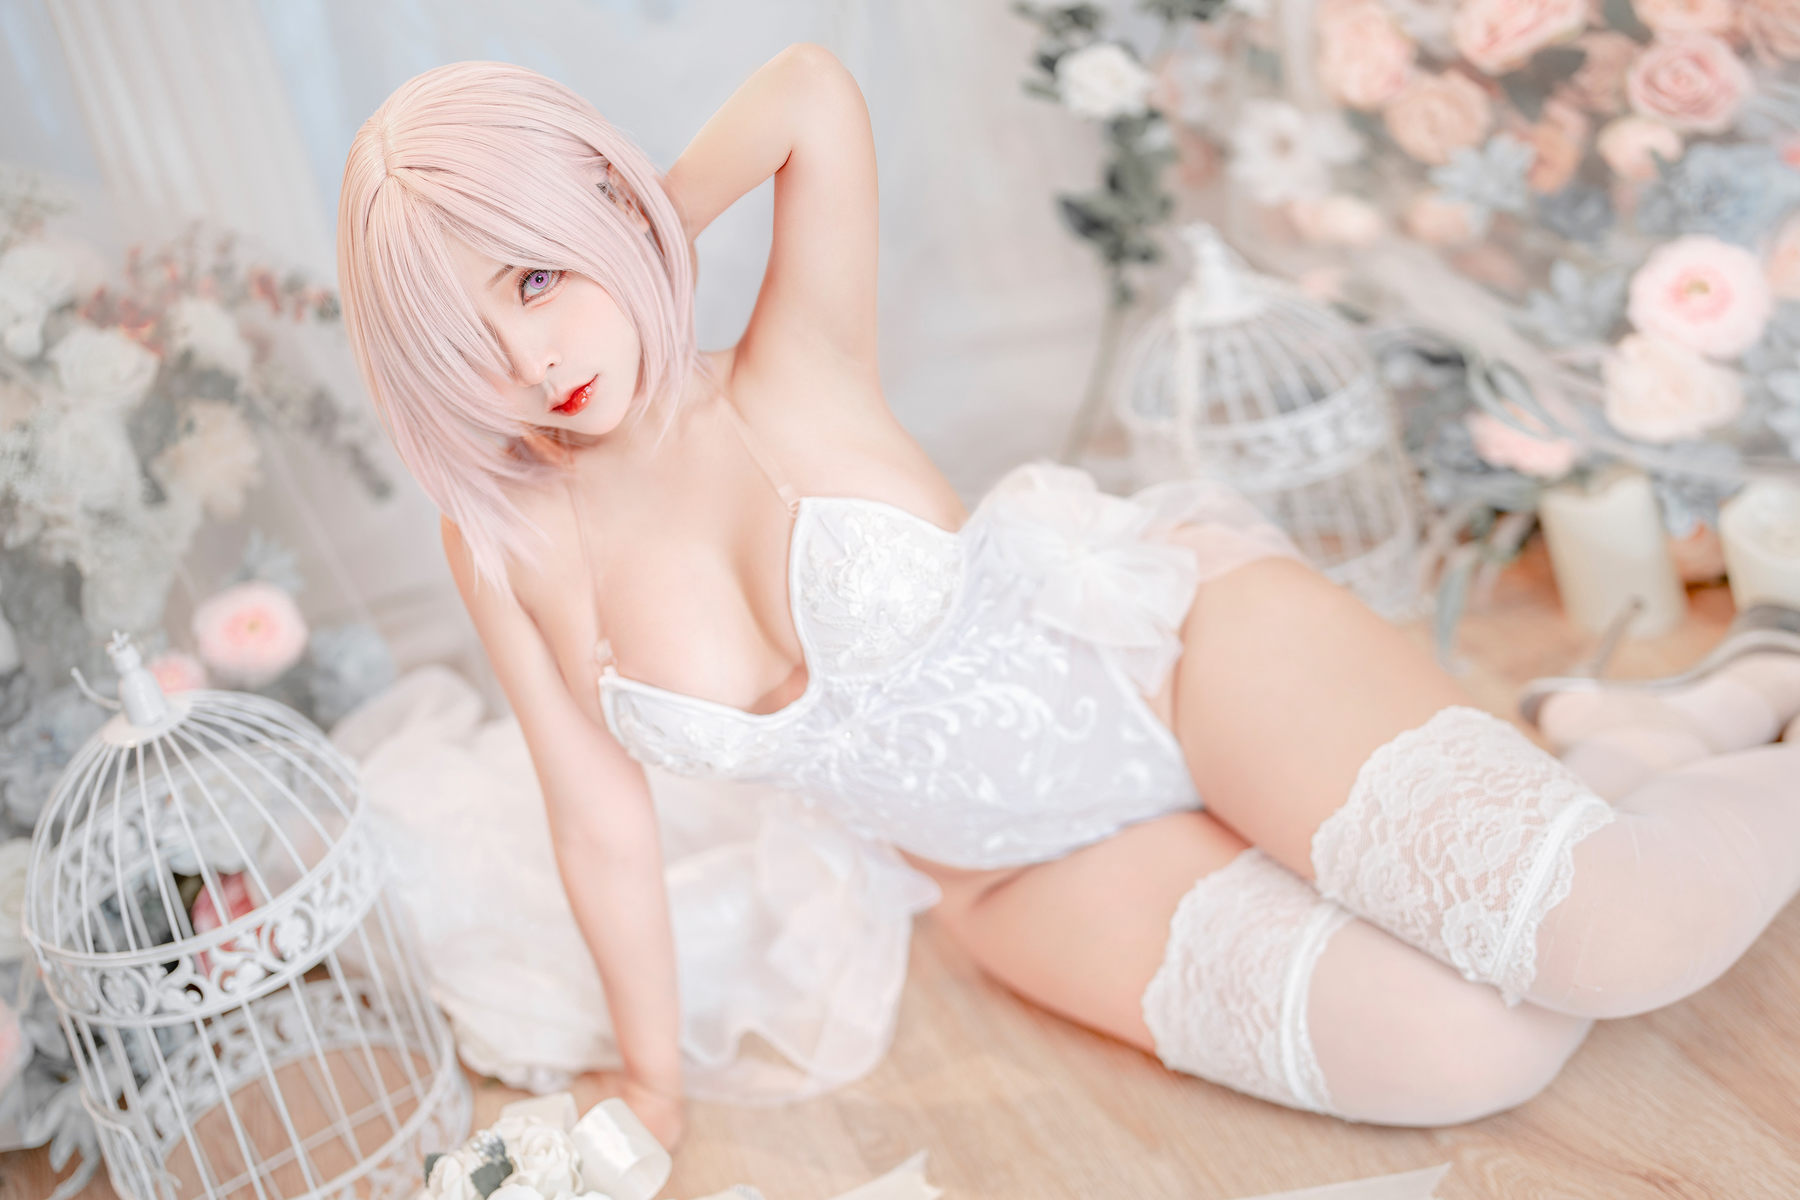 Sayo Momo - Mashu white lingerie body oil/(57P)